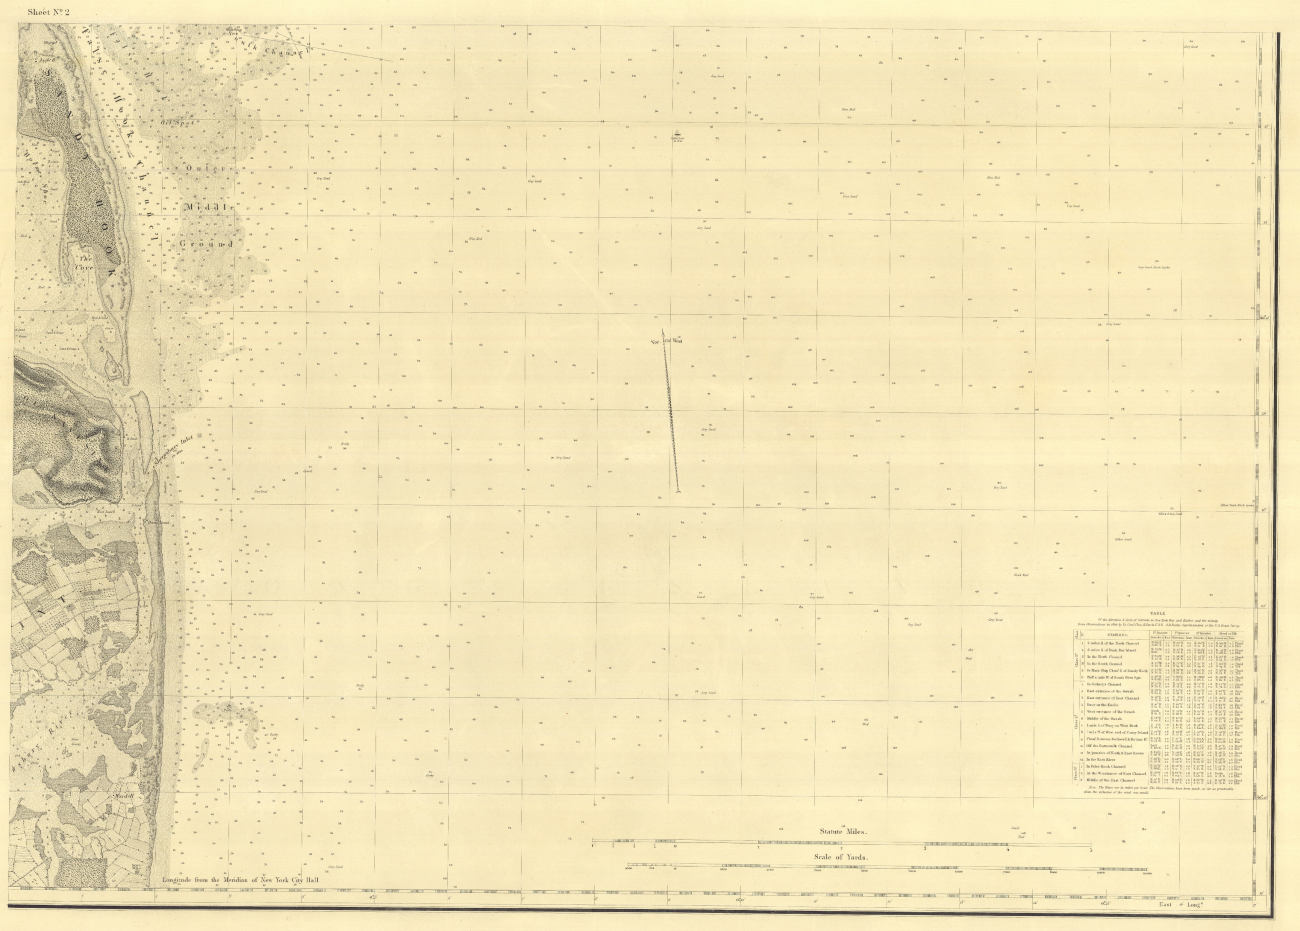 SE sheet of six sheets of New York Bay and Harbor